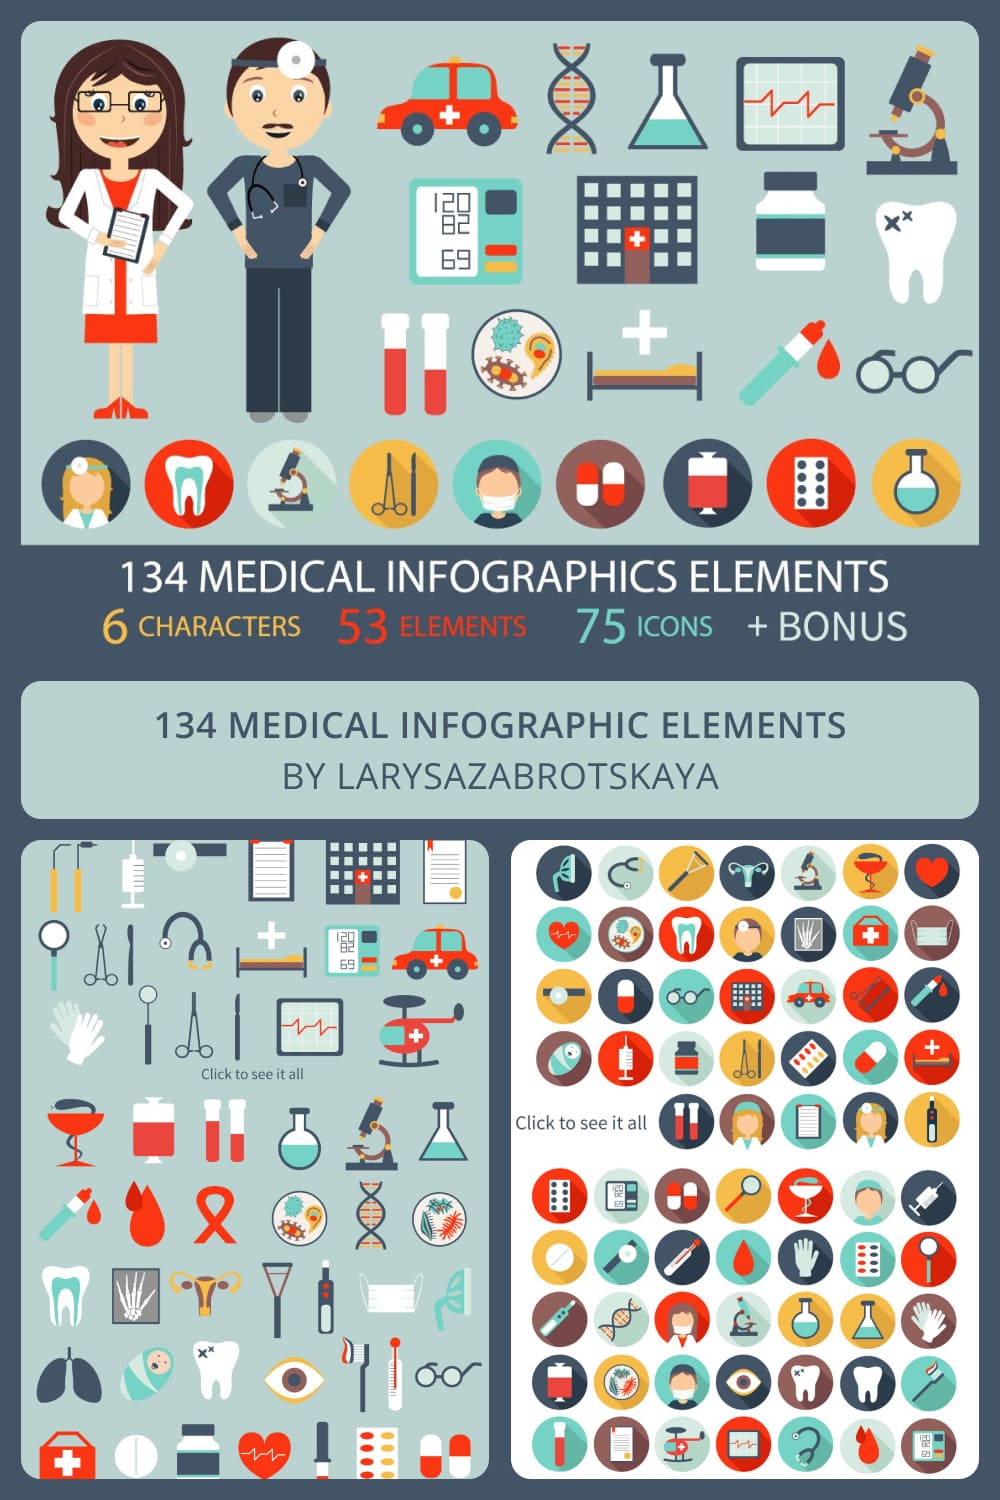 134 medical infographic elements pinterest image.